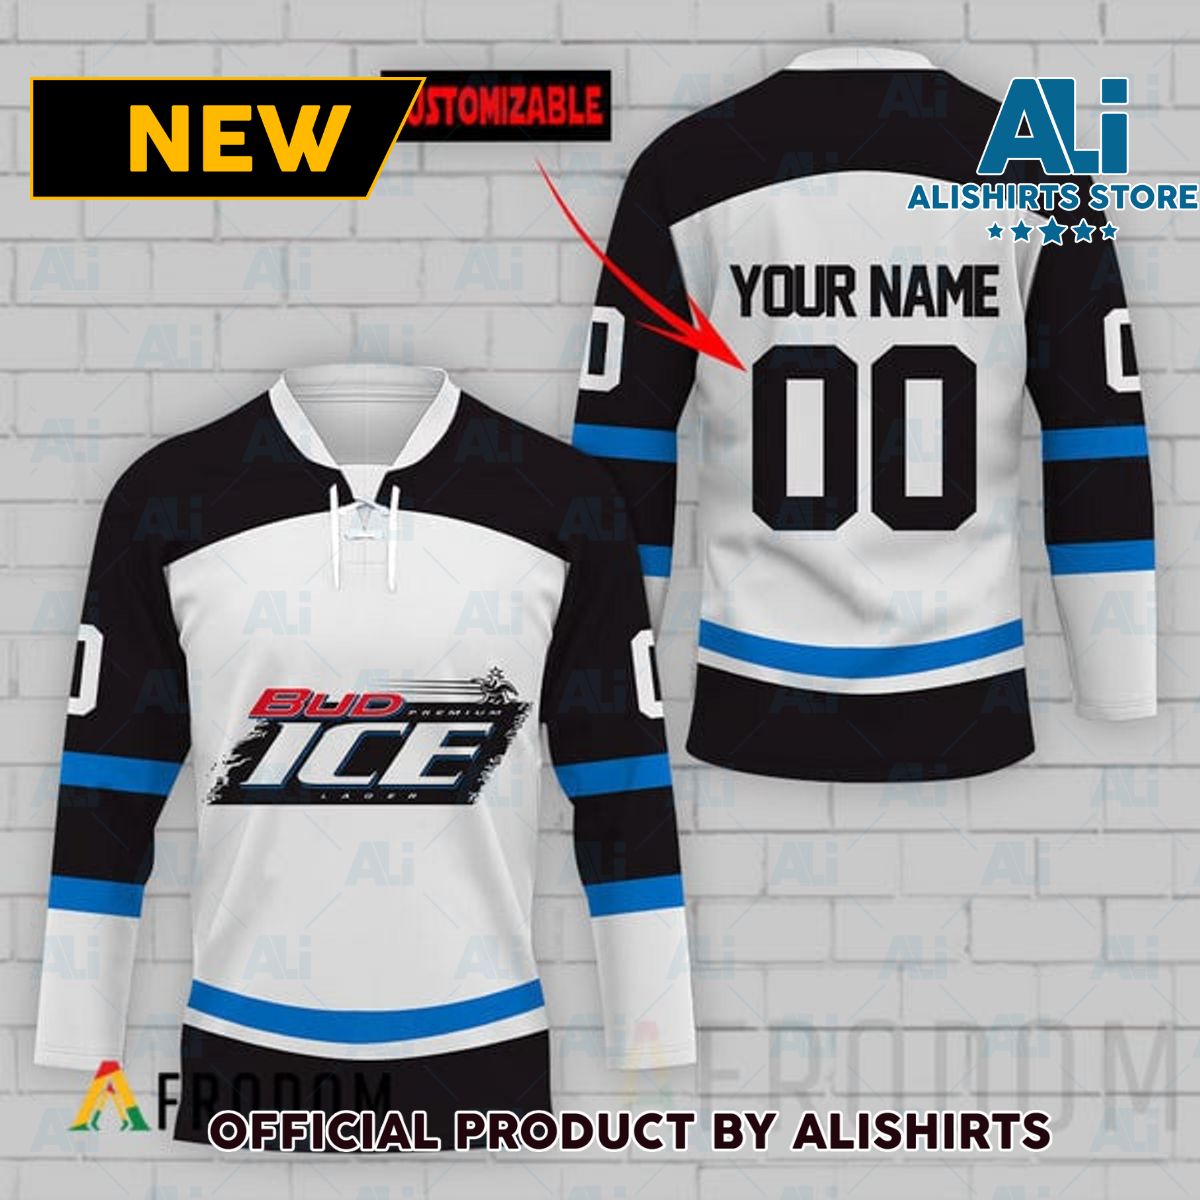 Personalized Bud Ice Hockey Jersey